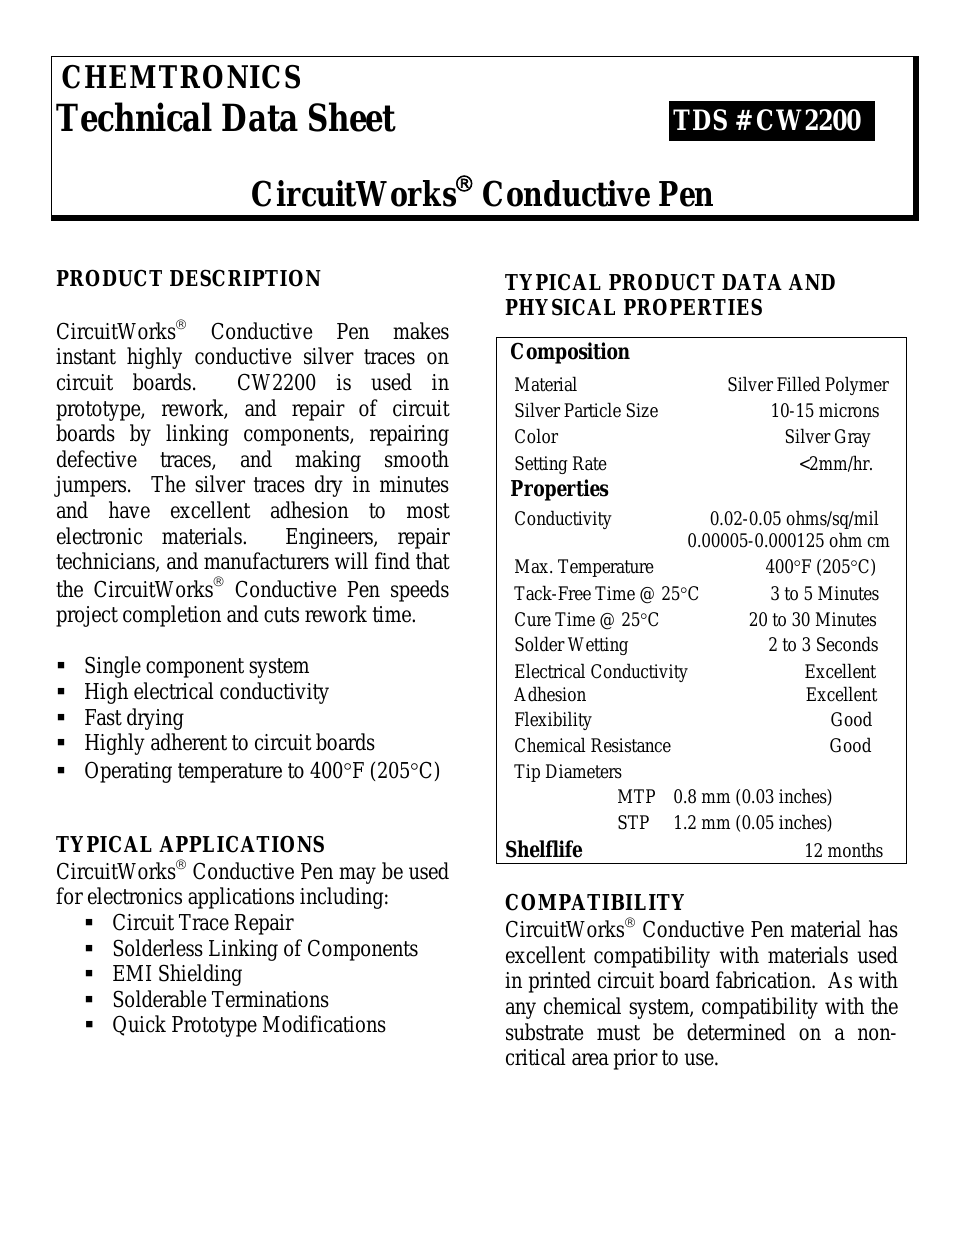 CircuitWorks® Conductive Pen CW2200STP